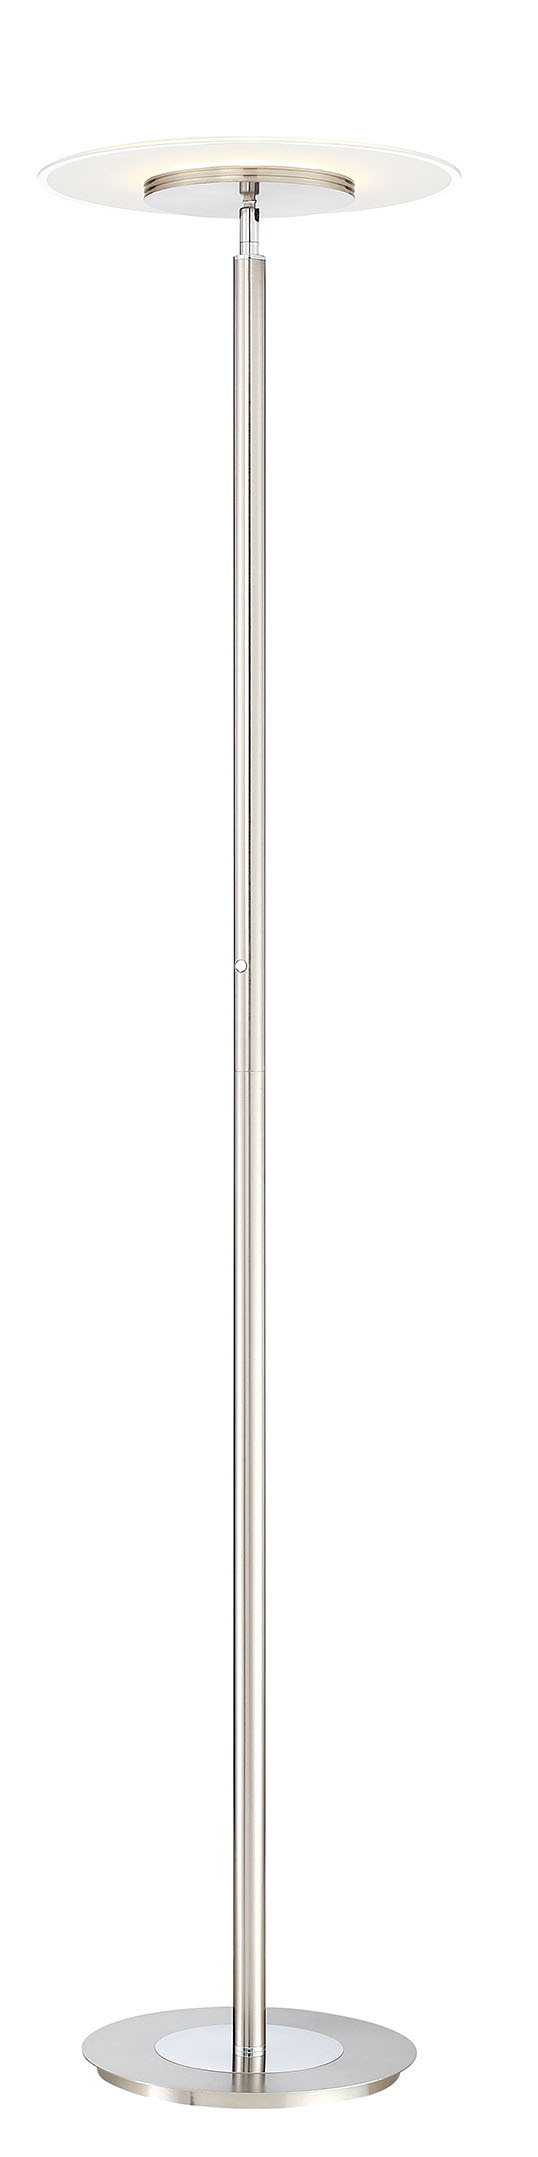 Tampa - Single Pole Floor Lamp